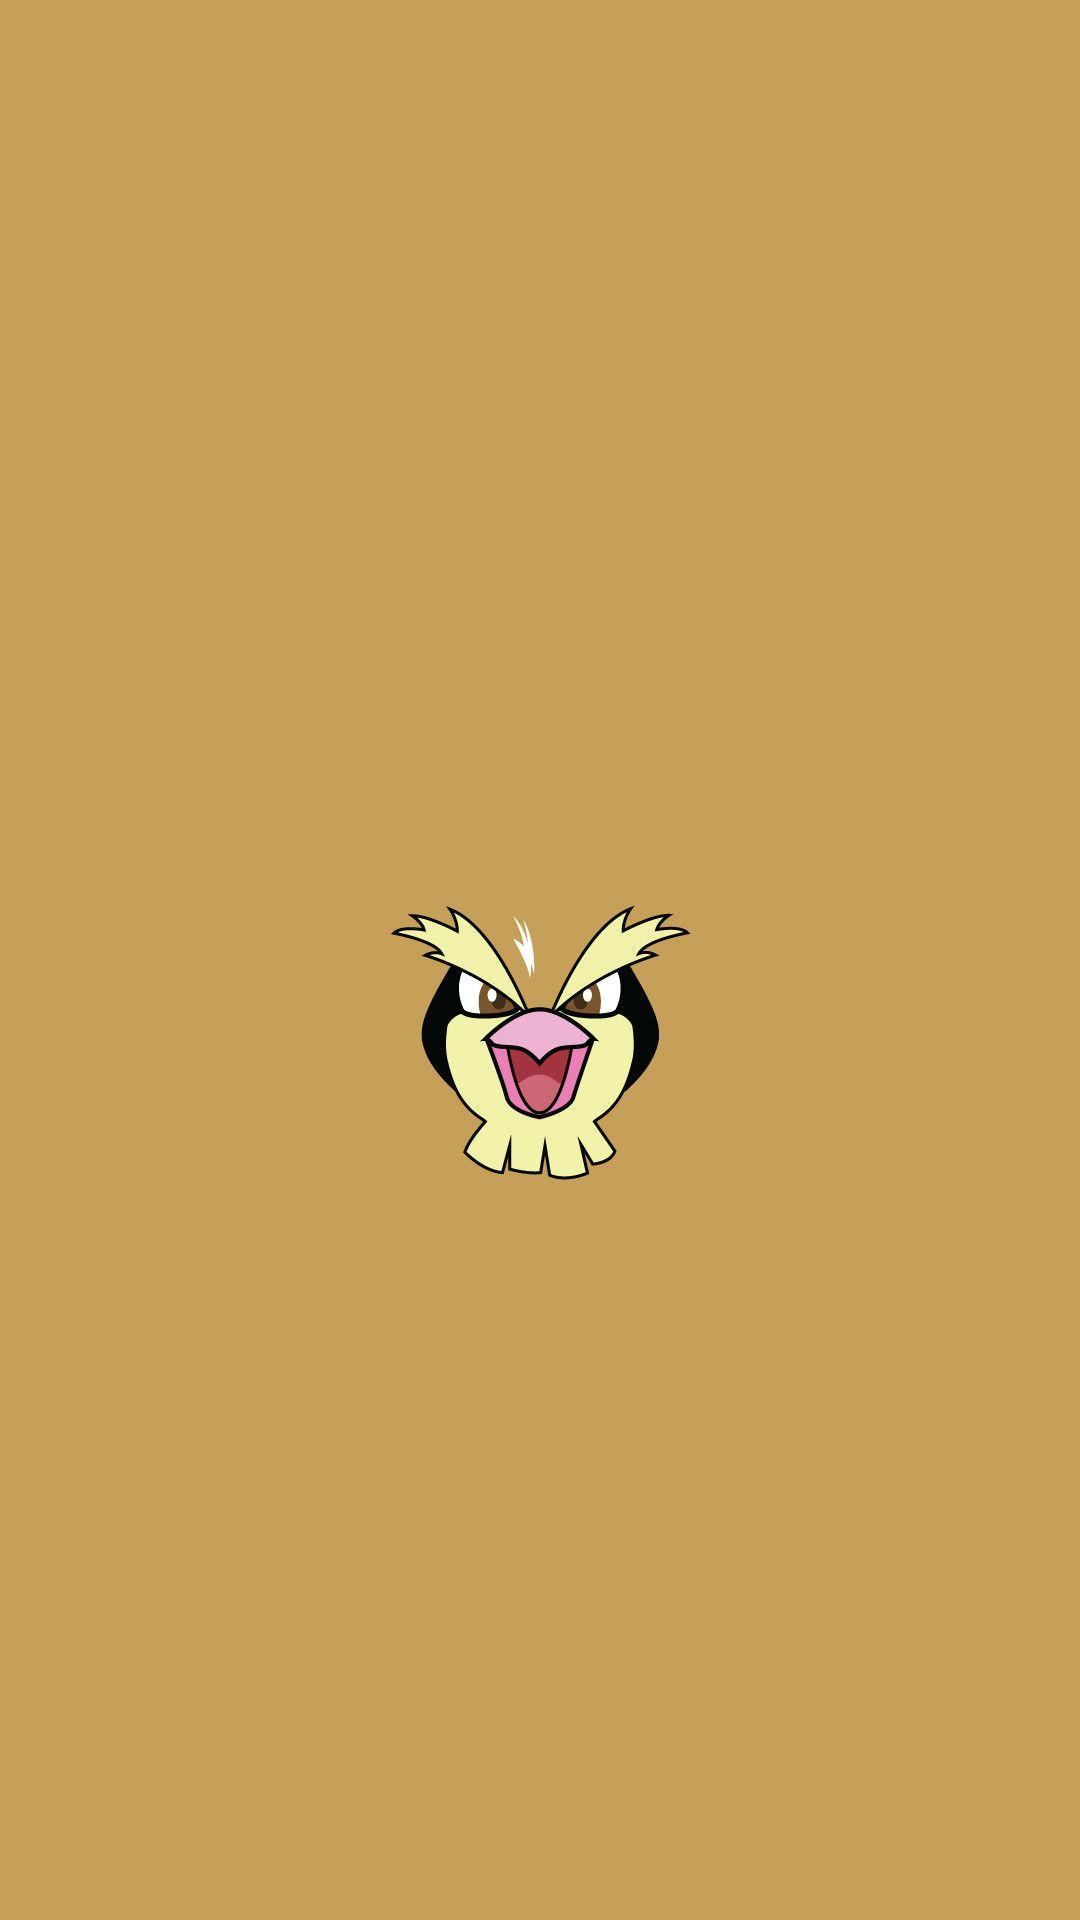 Pokemon Minimalist iPhone Wallpaper +27 image